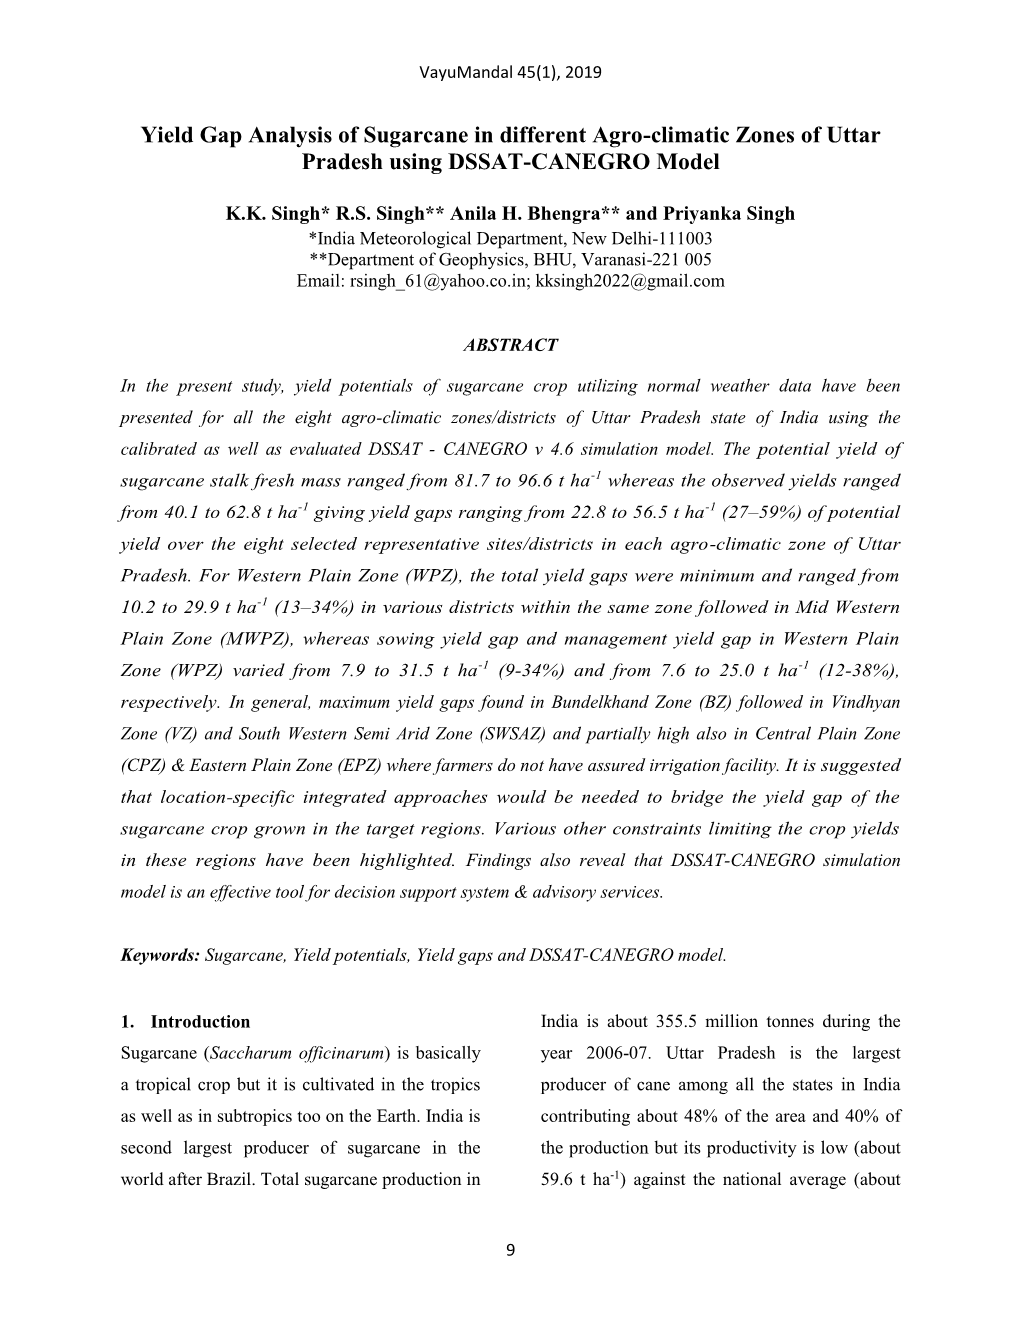 Yield Gap Analysis of Sugarcane in Different Agro-Climatic Zones of Uttar Pradesh Using DSSAT-CANEGRO Model